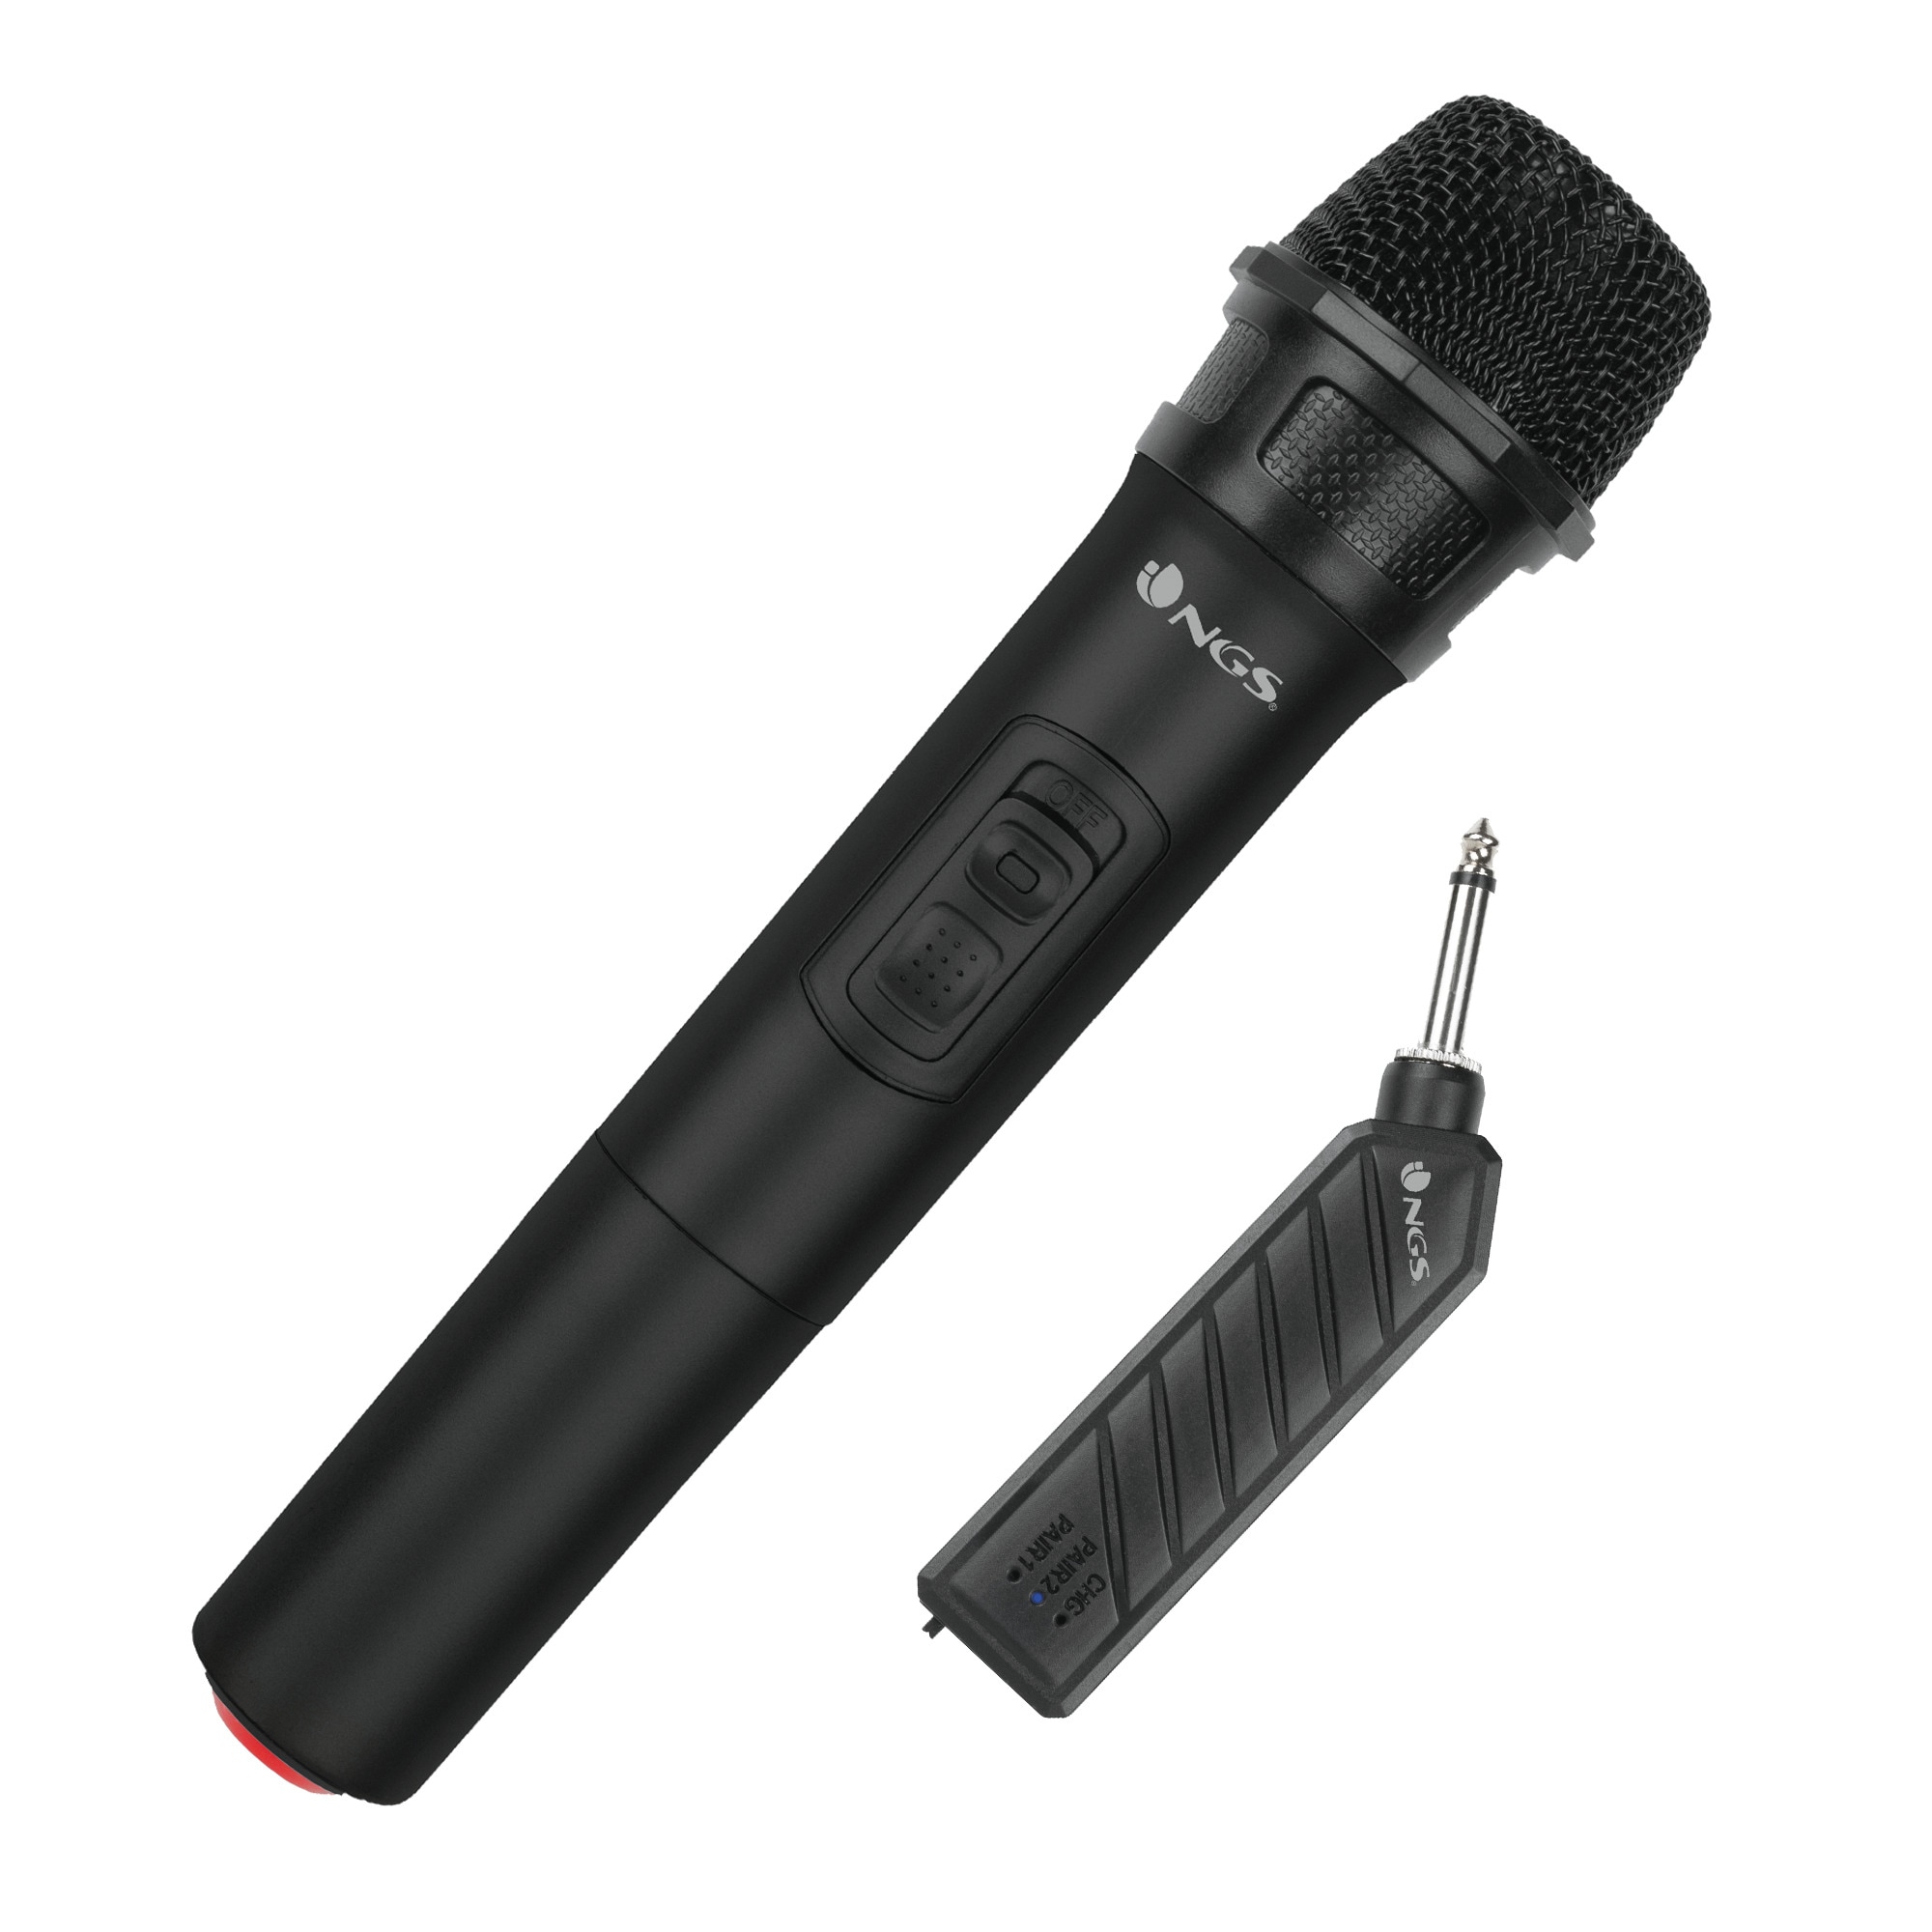 Trådlös mikrofon, 6,3mm kontakt, SINGERAIR - Elkjøp